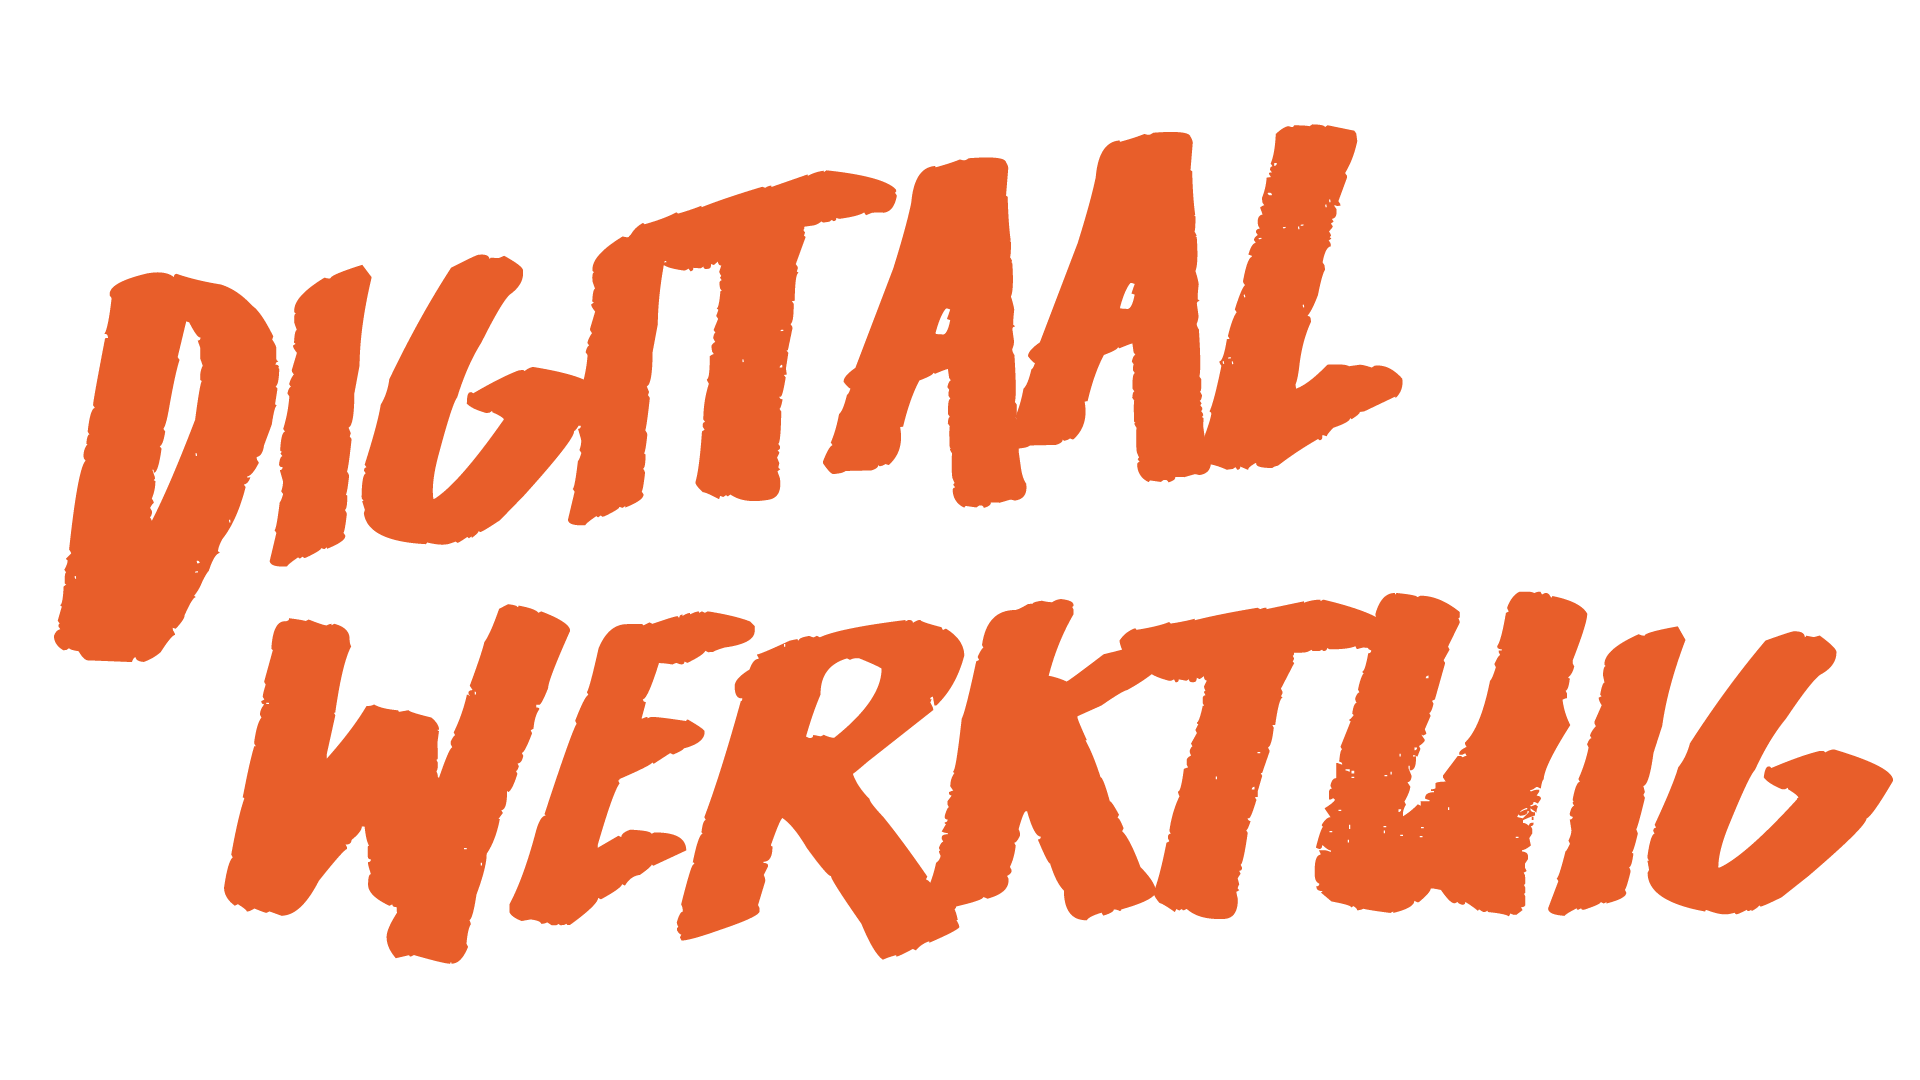 Digitaal Werktuig logo